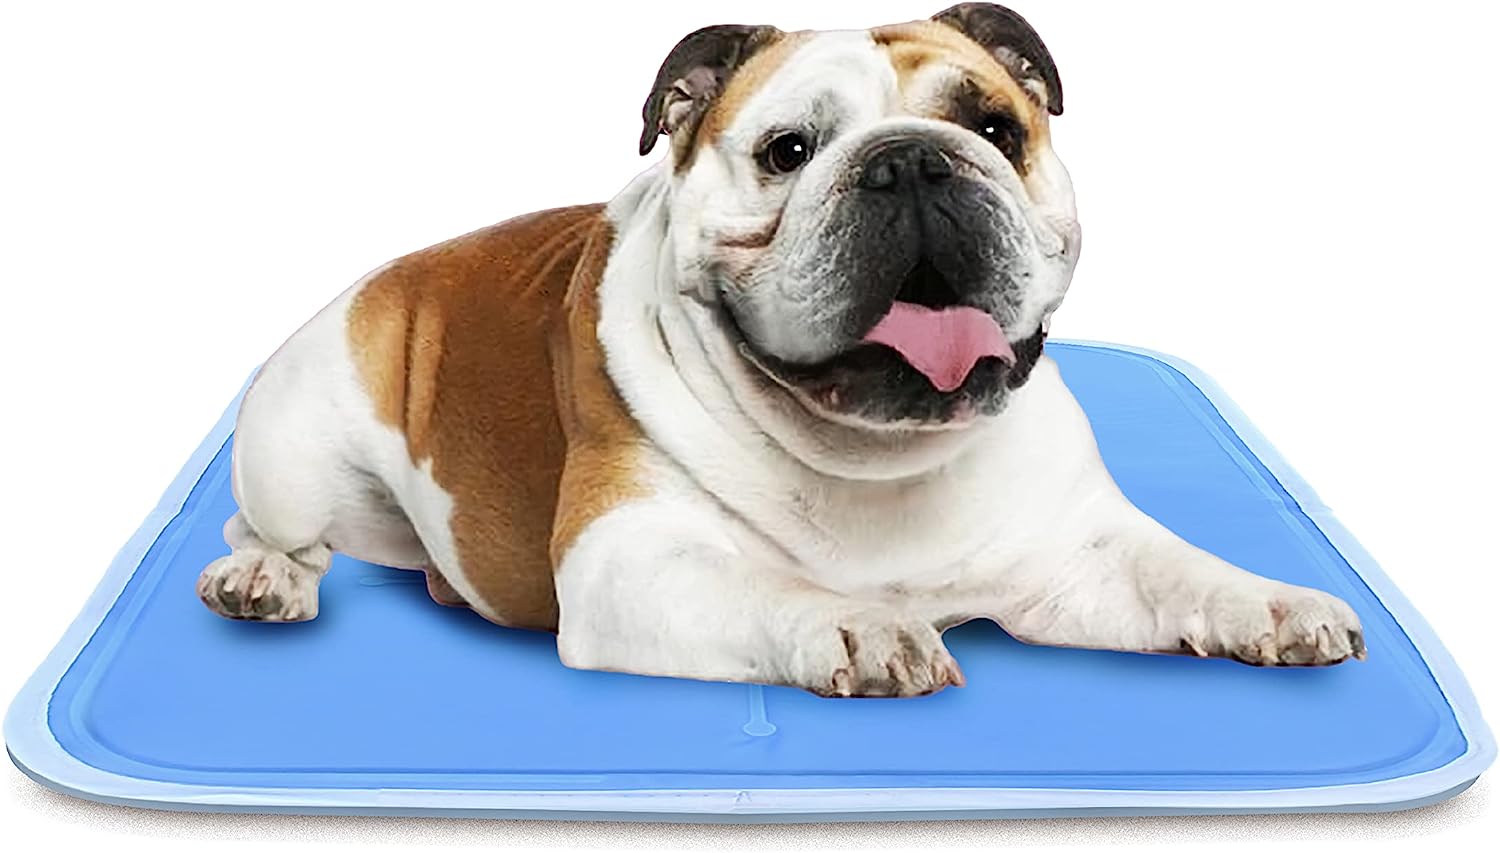 The Green Pet Shop Dog Cooling Mat